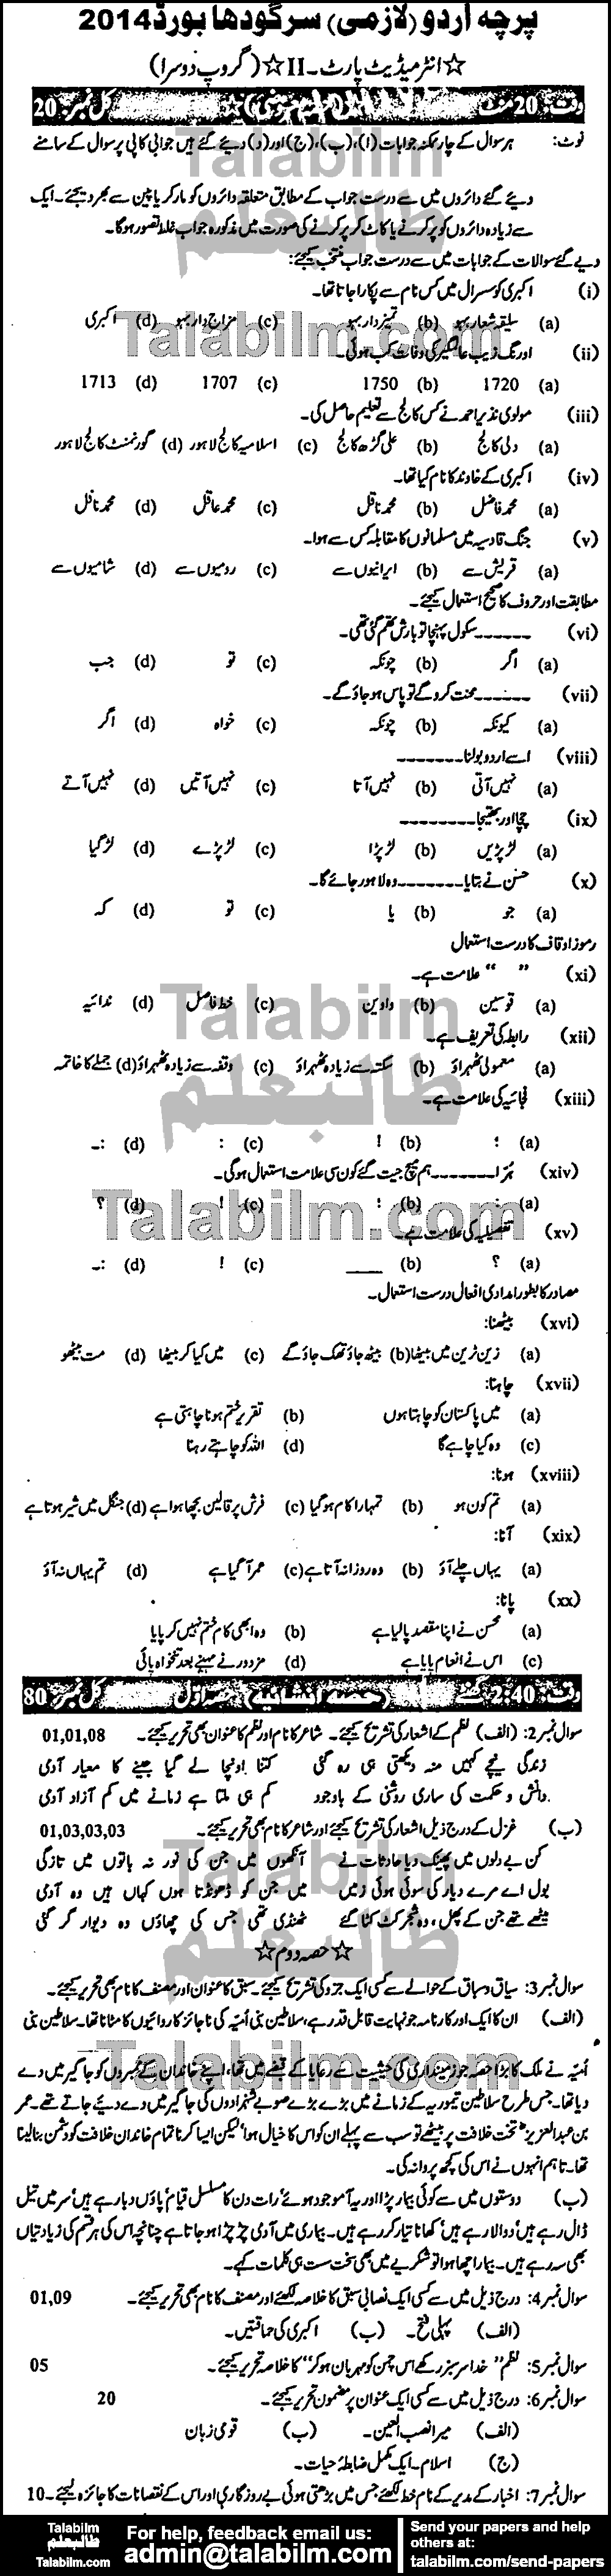 Urdu 0 past paper for Group-II 2014